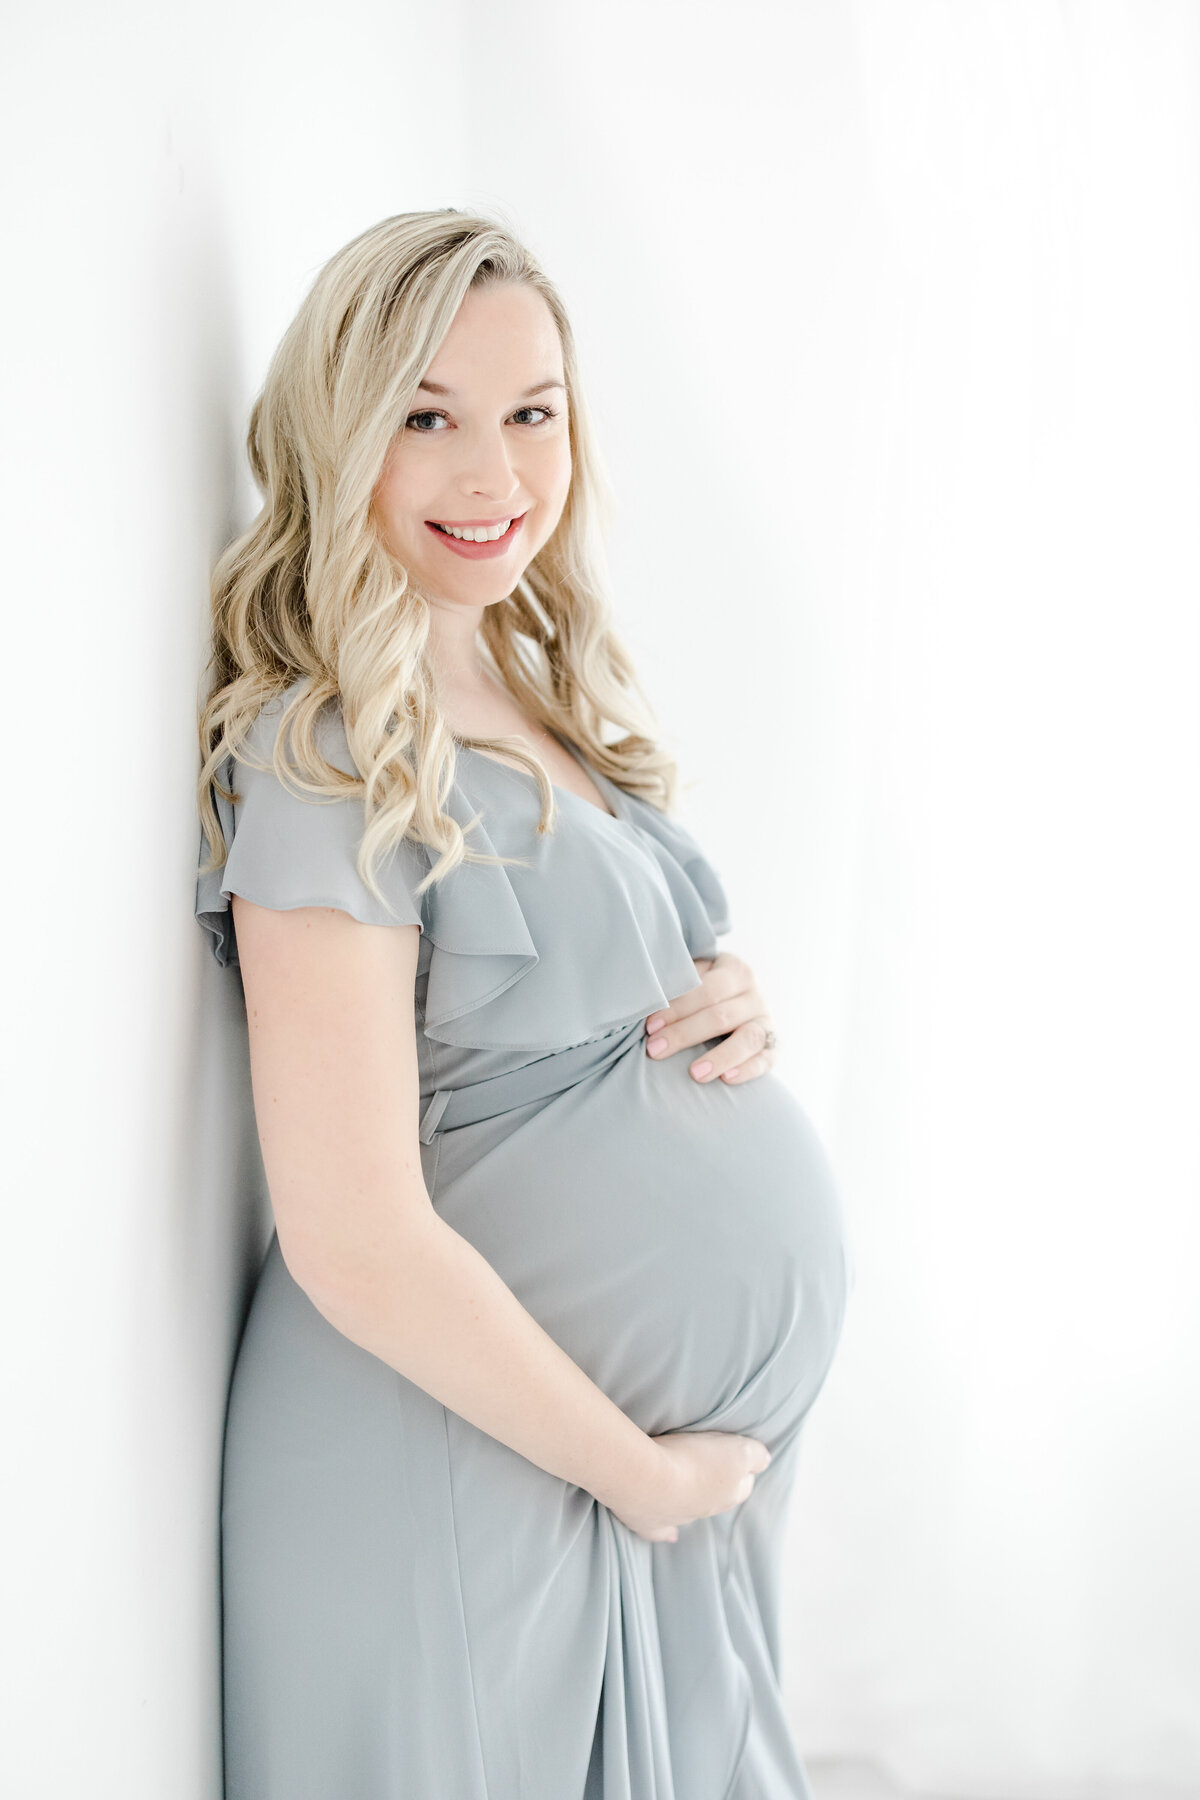 Westport CT Maternity Photographer - 41